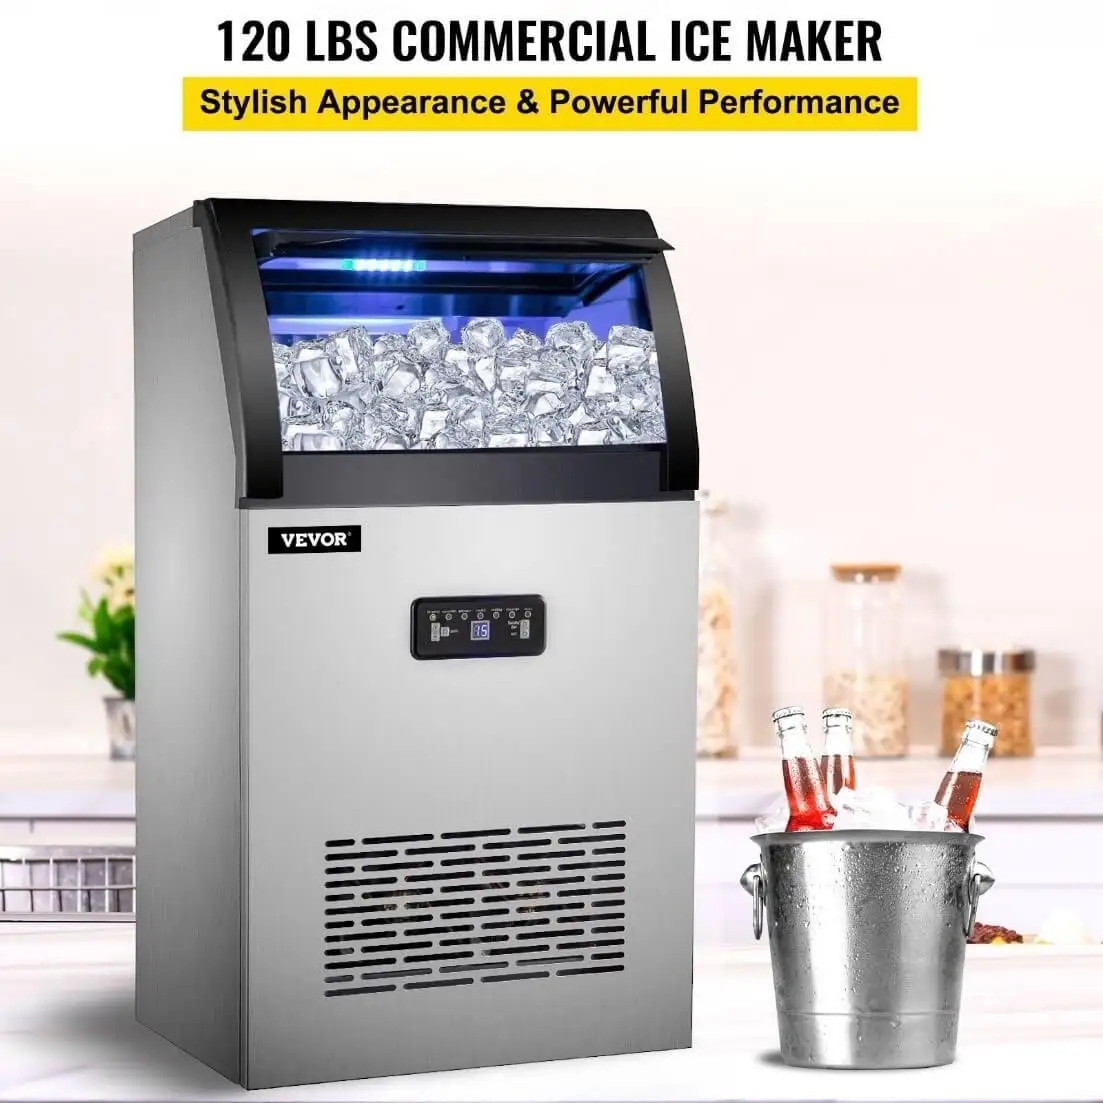 VEVOR 120lbs commercial ice maker